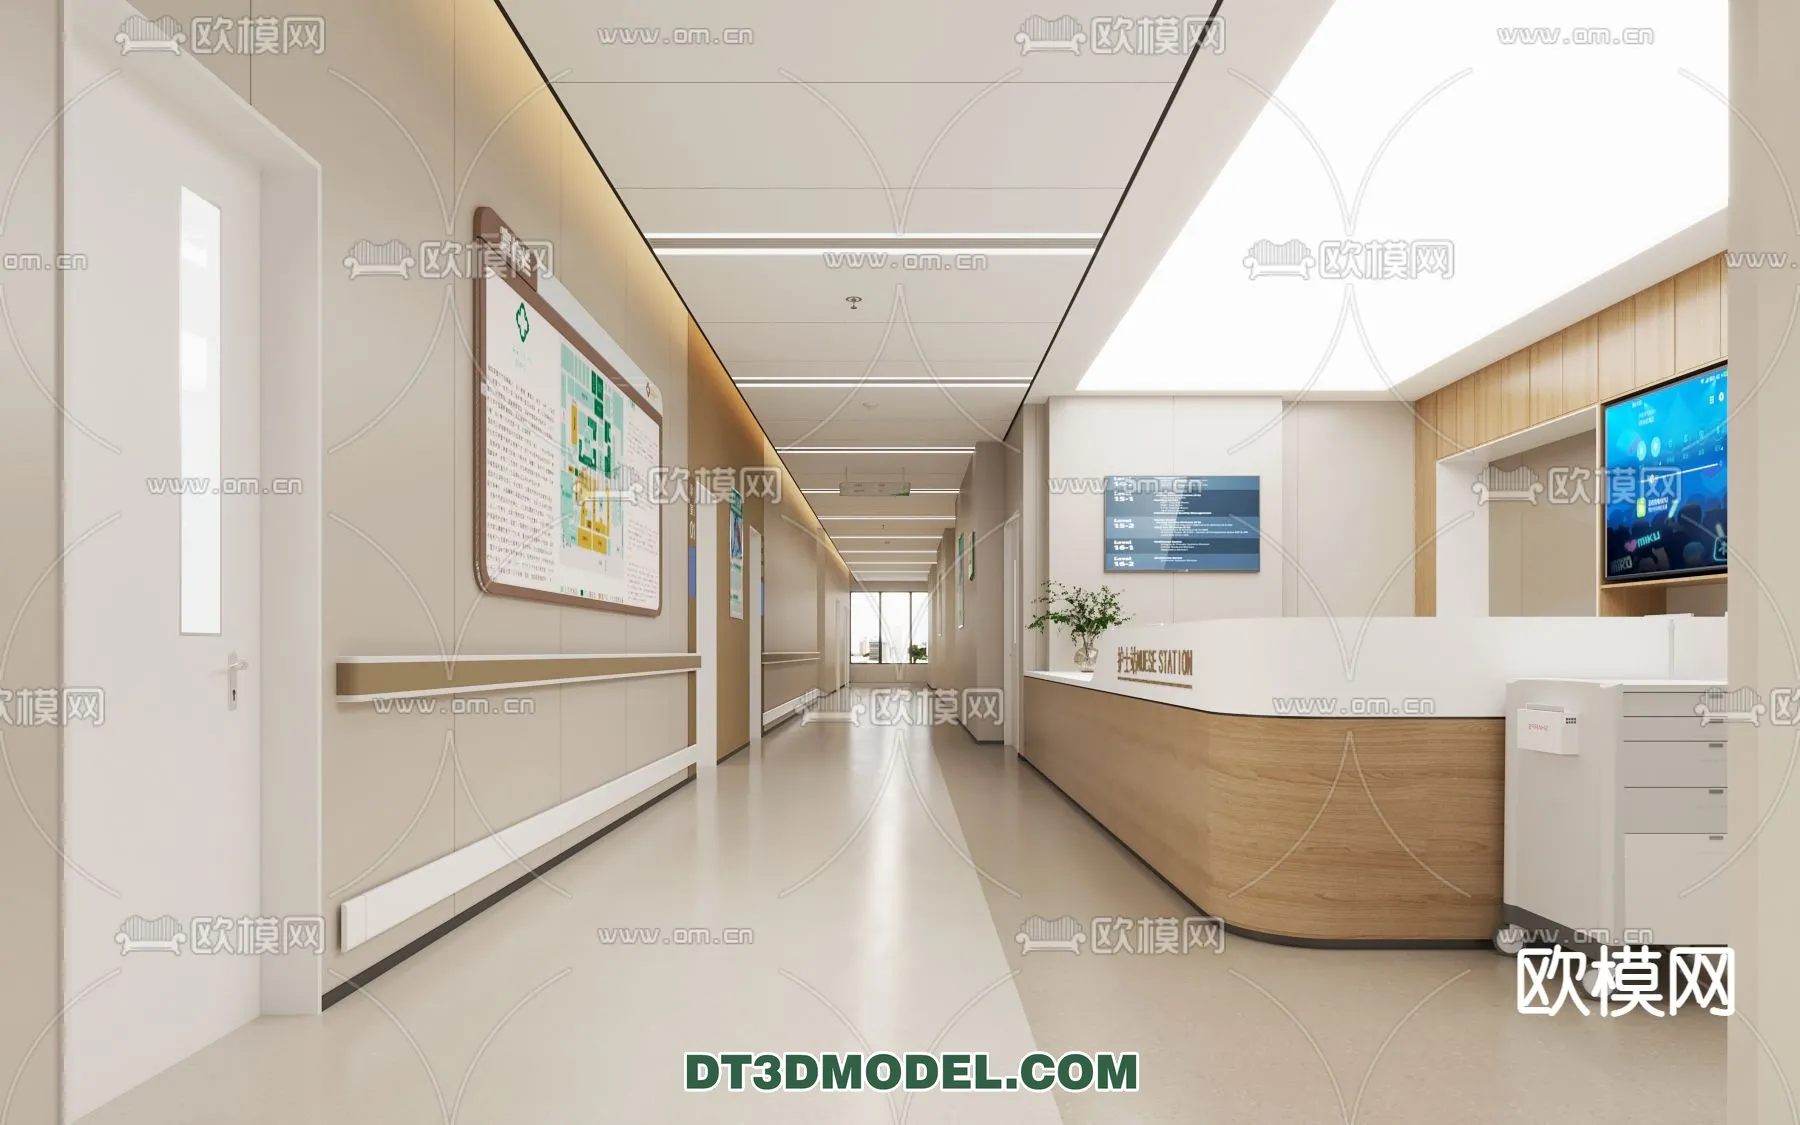 HOSPITAL 3D SCENES – MODERN – 0094